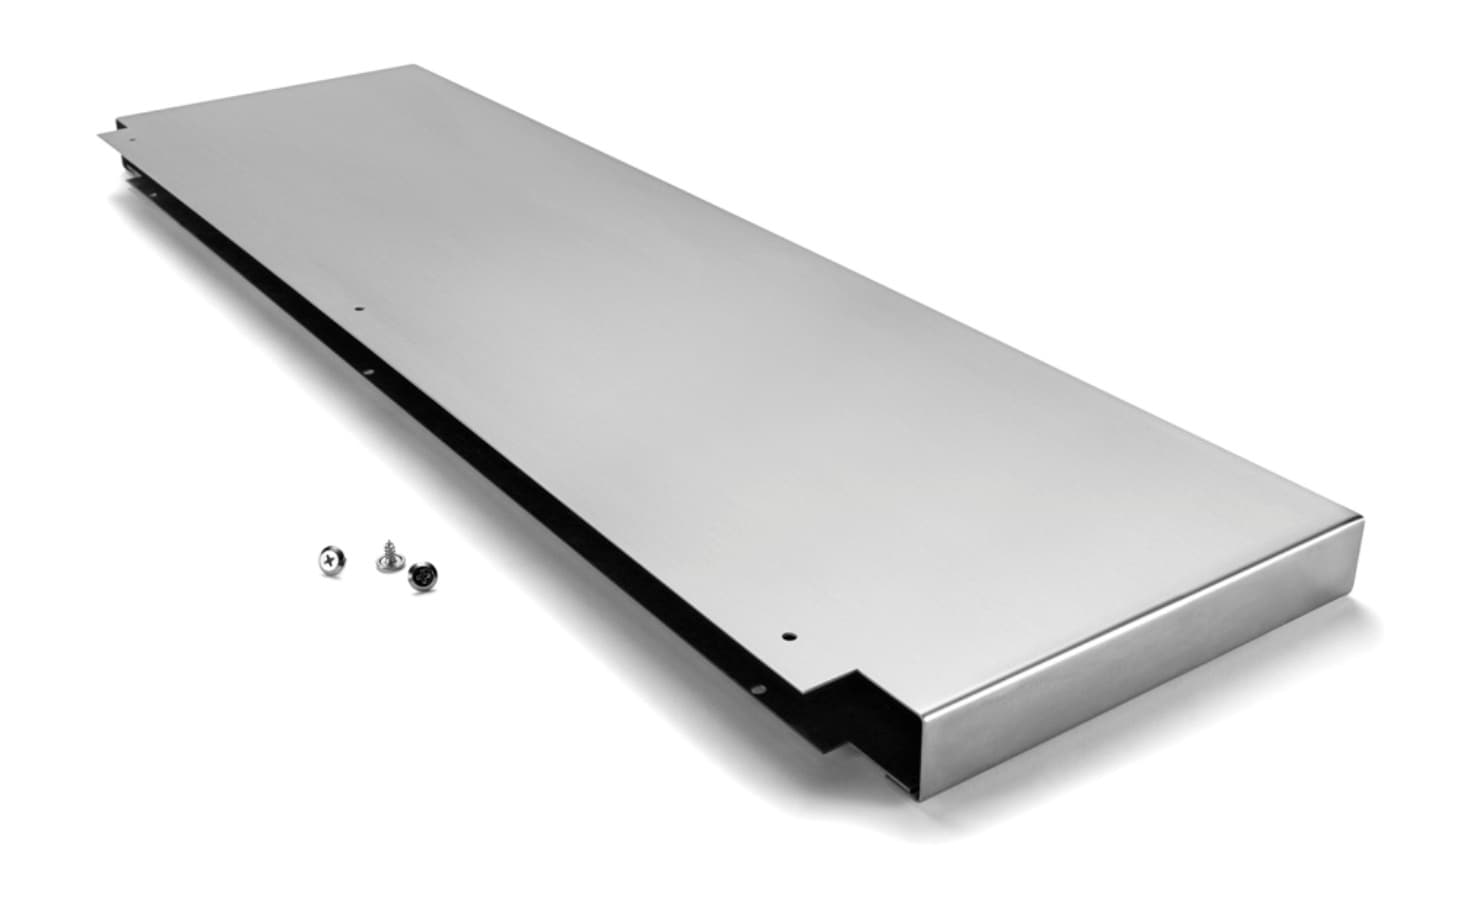 Best Buy: Backguard for GE Café 30 Freestanding Ranges Stainless steel  JXS80SS